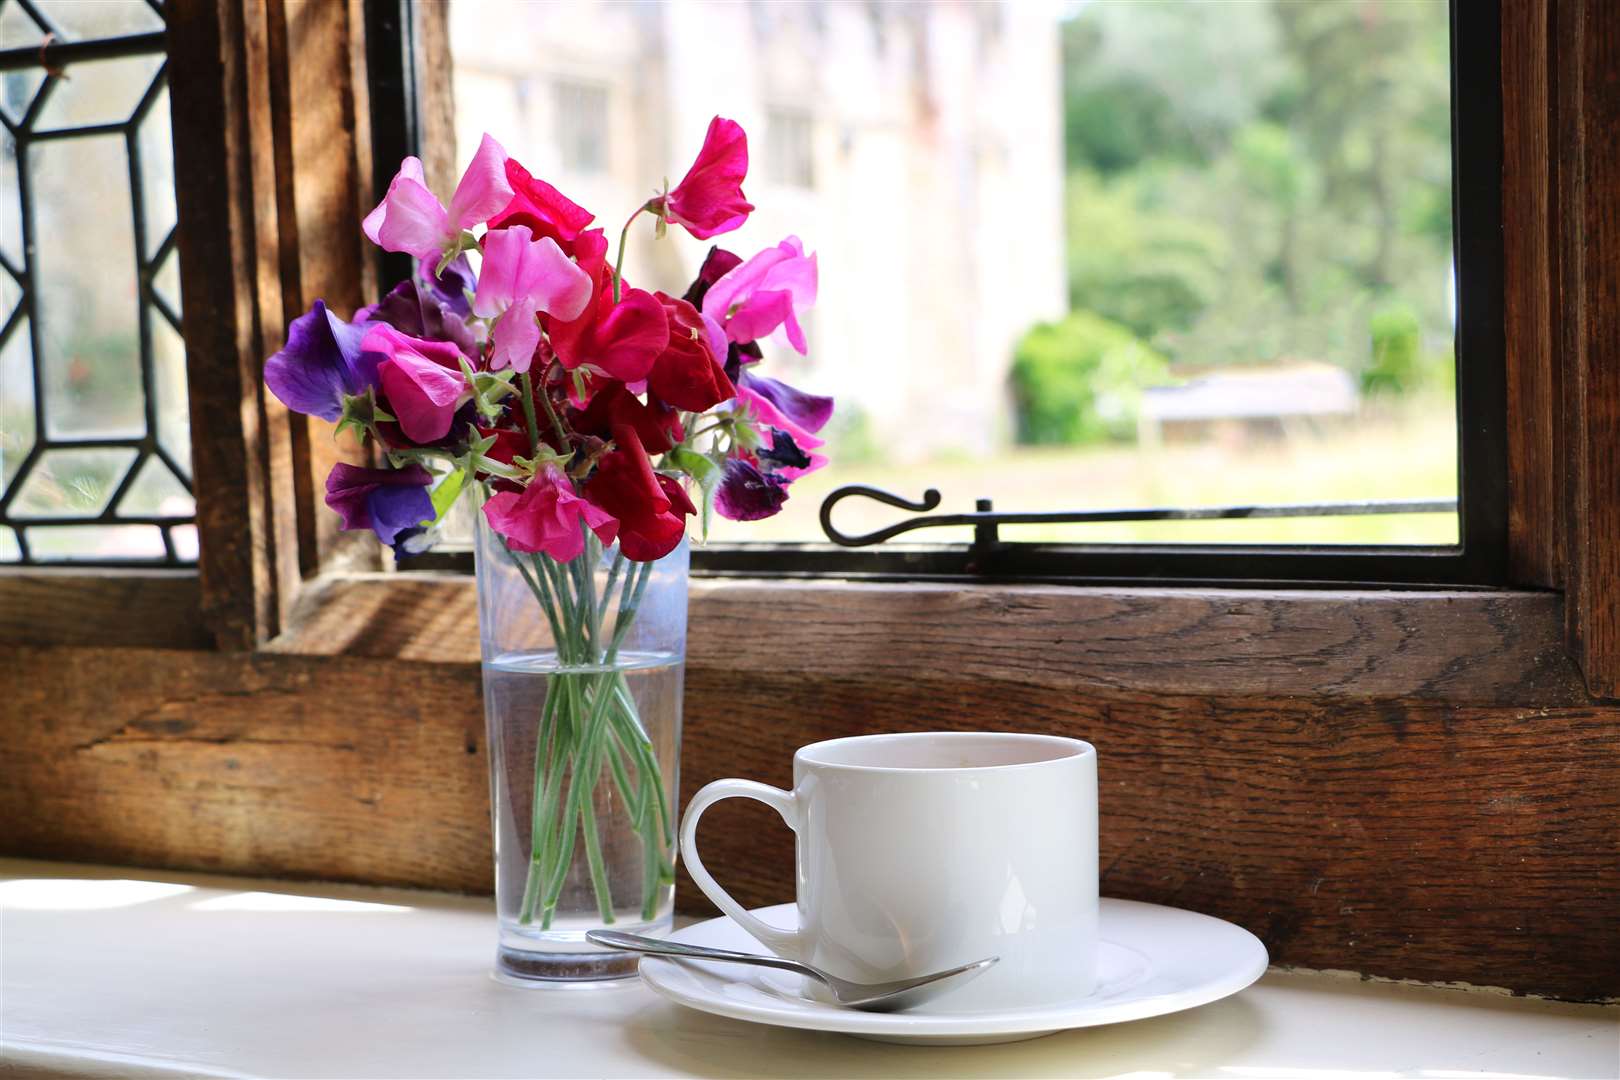 Enjoy afternoon tea at Hever Castle